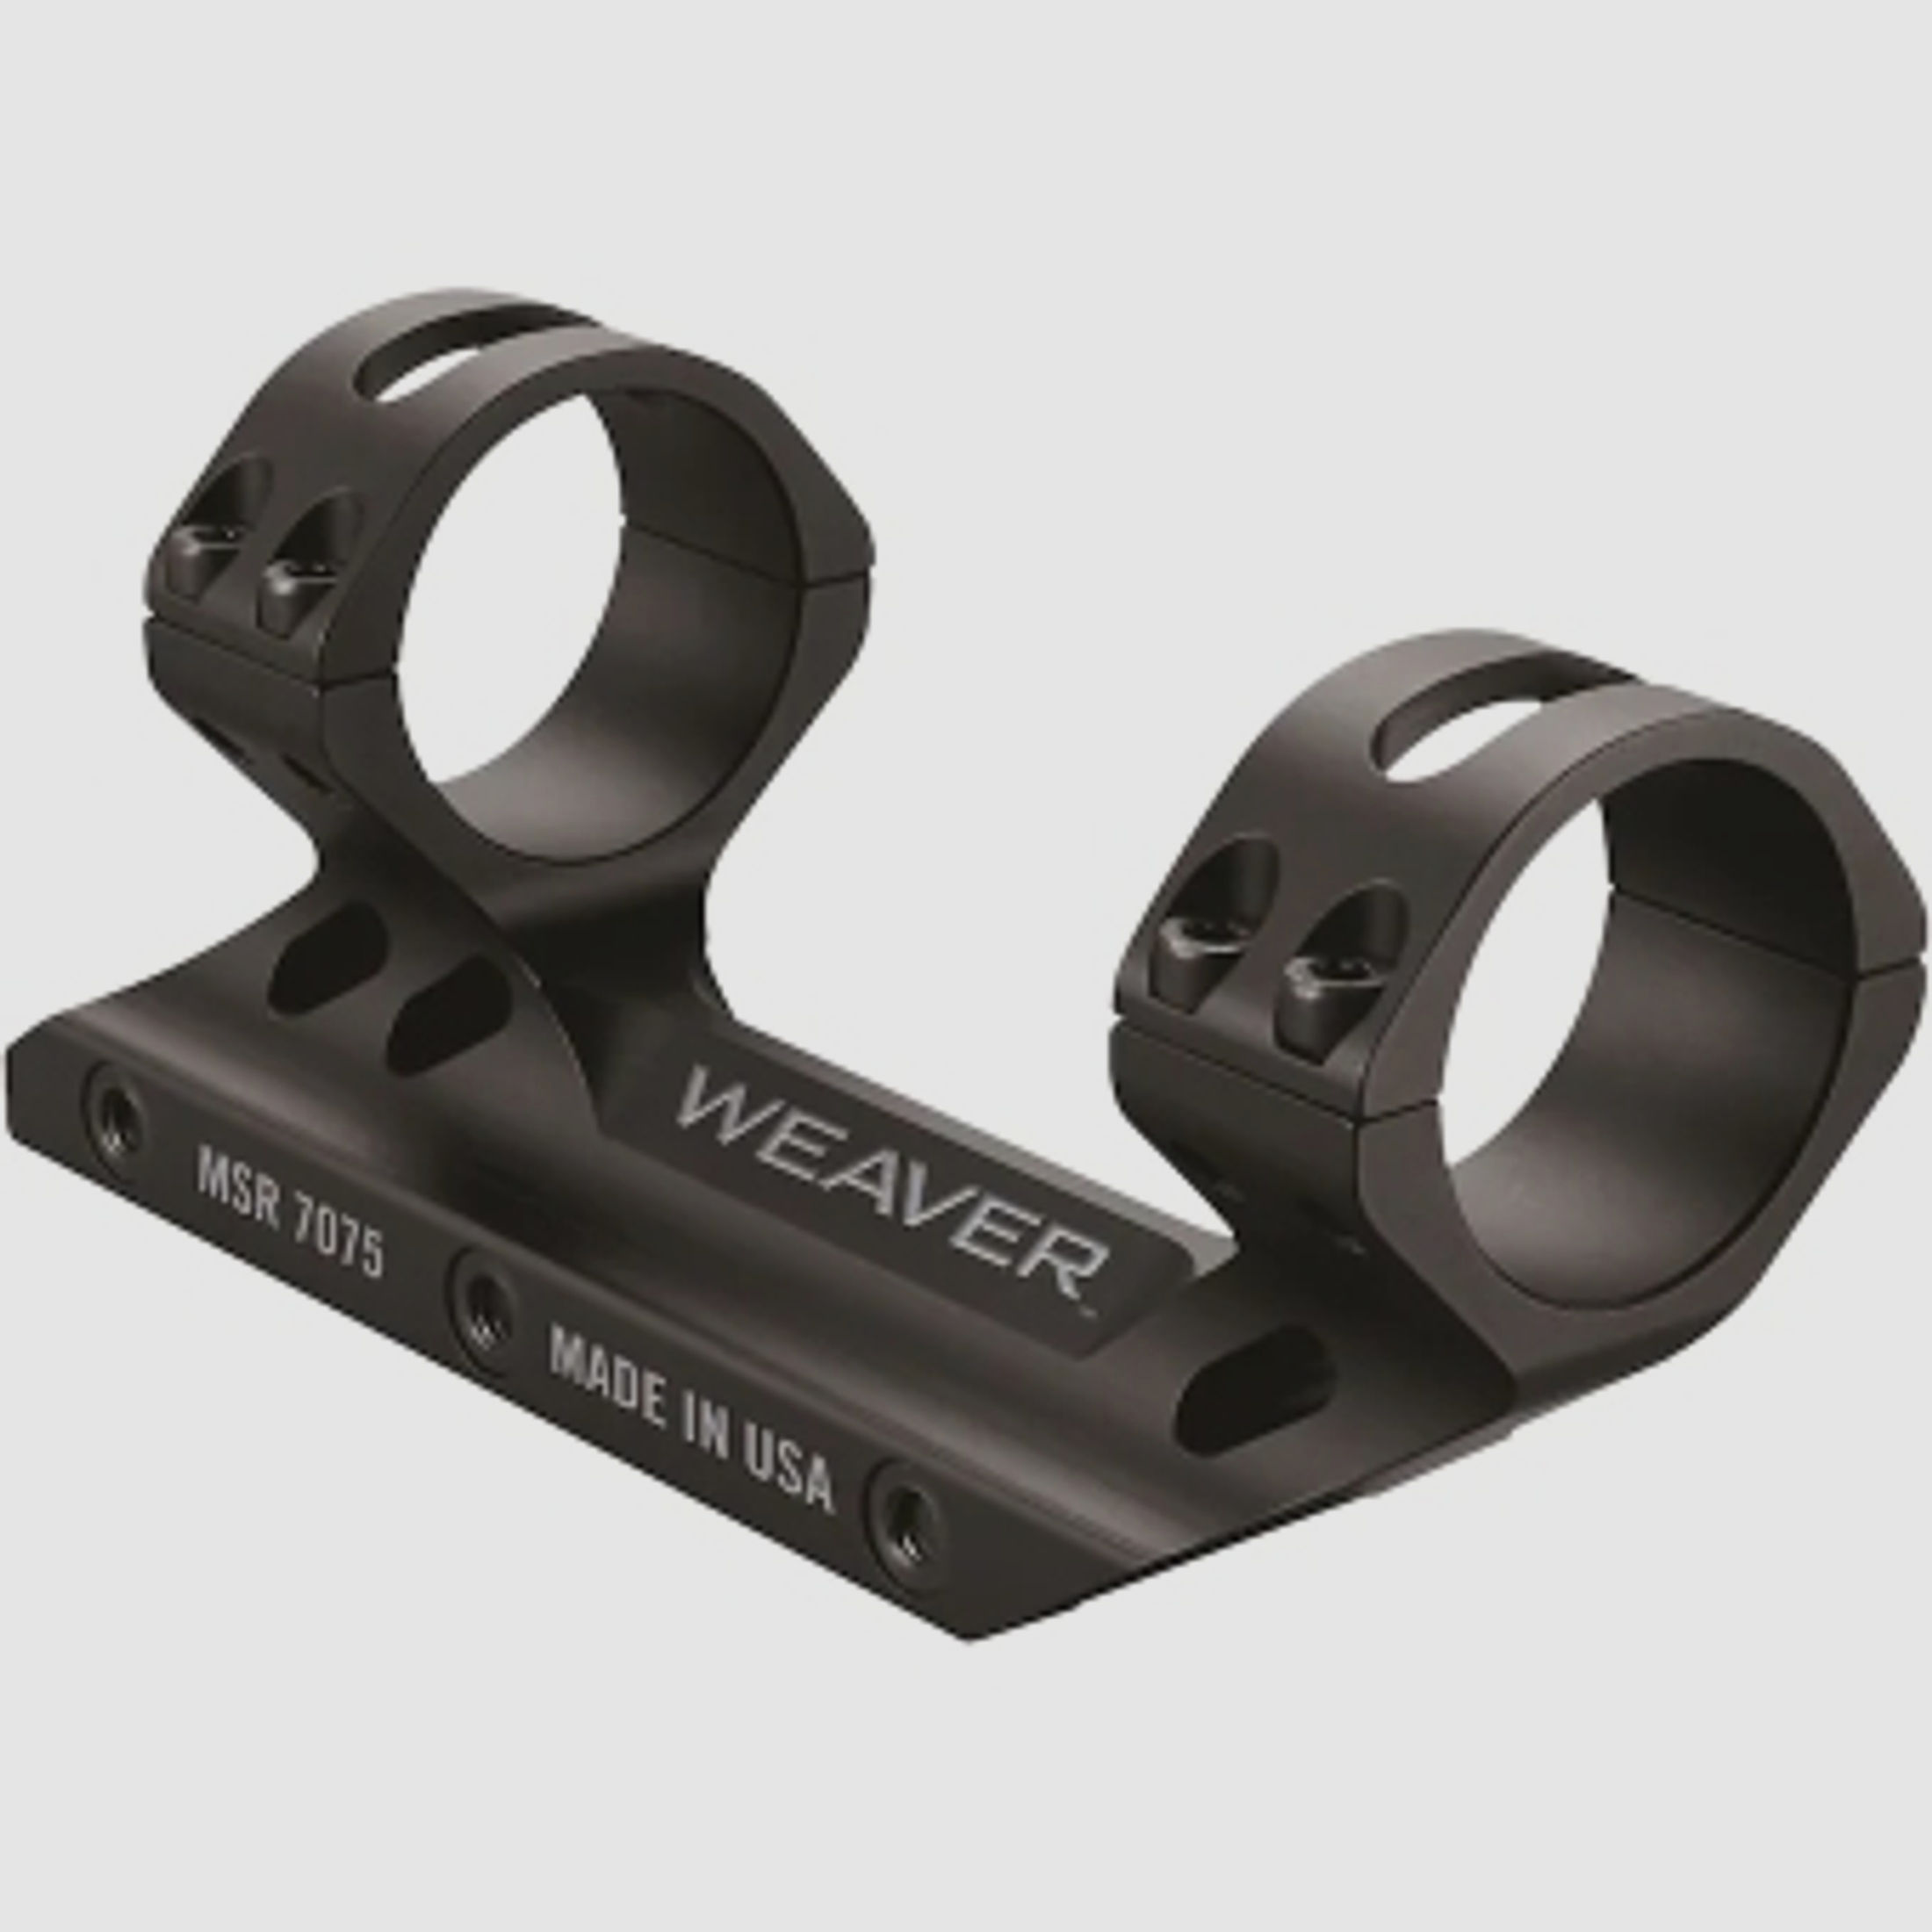 Weaver Premium MSR 1-tlg. Mount Picatinny-Style mit Integral Ringe matt schwarz 25,4mm